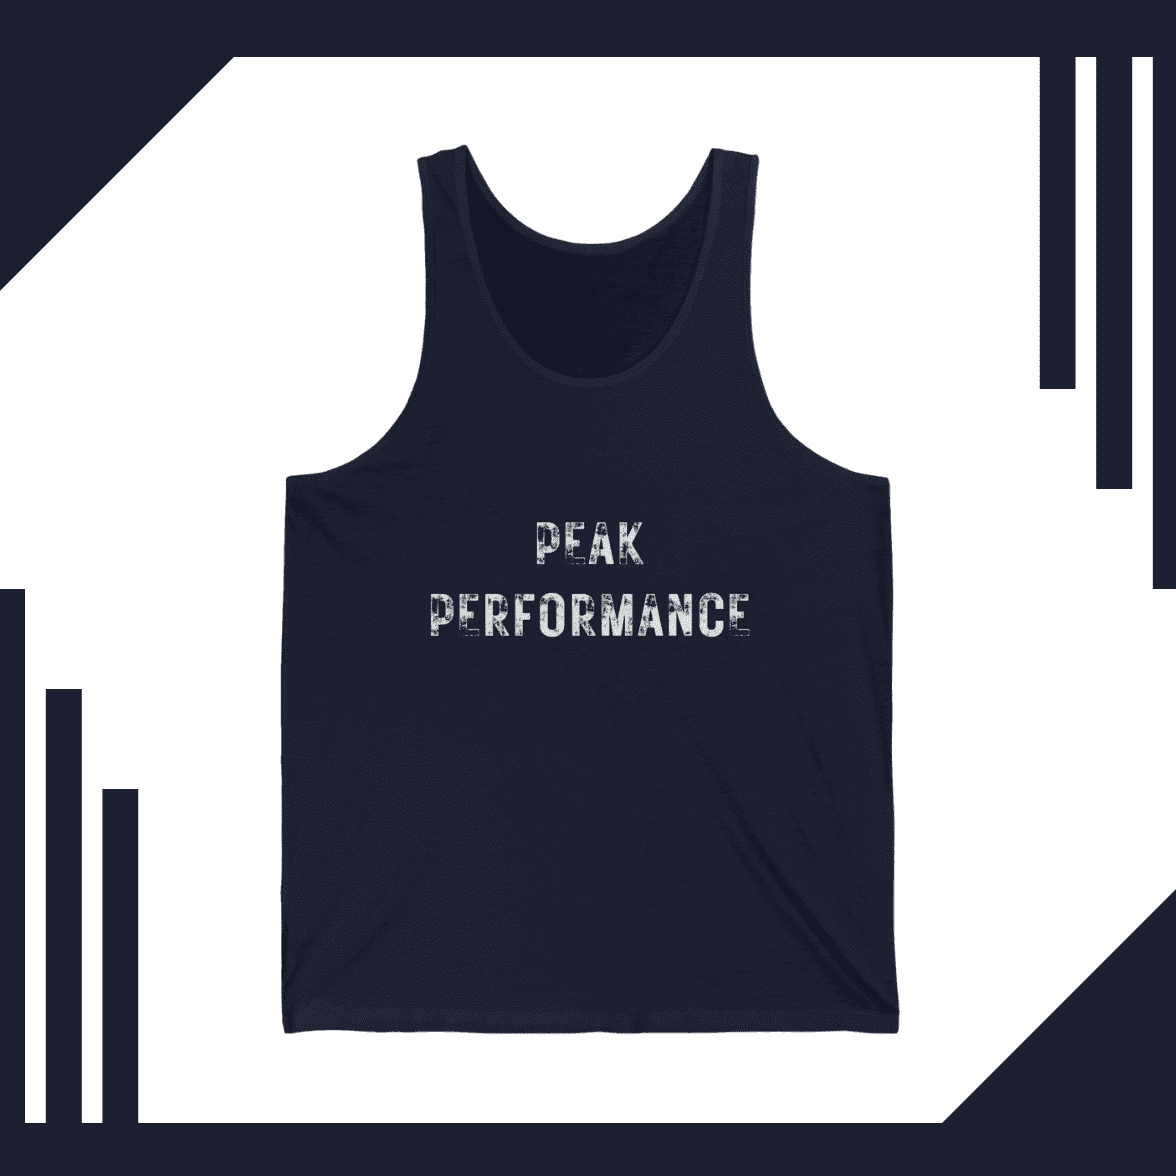 Men's Navy Peak Performance White Distressed Print Tank Top